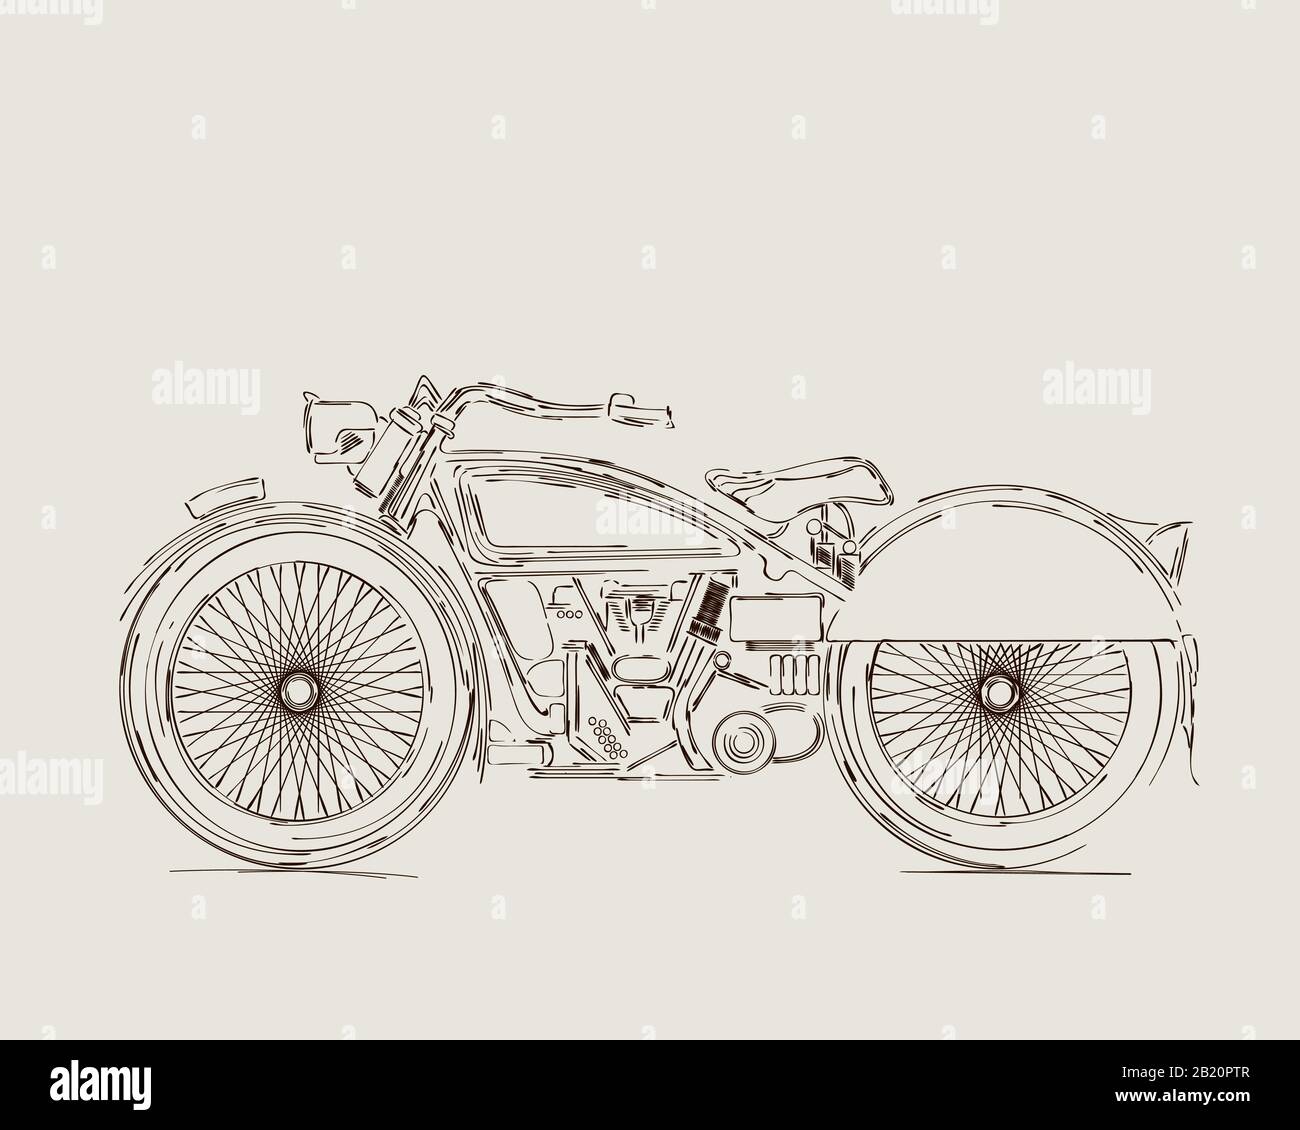 Dibujo de croquis vectorial de motocicleta vintage Imagen Vector de stock -  Alamy